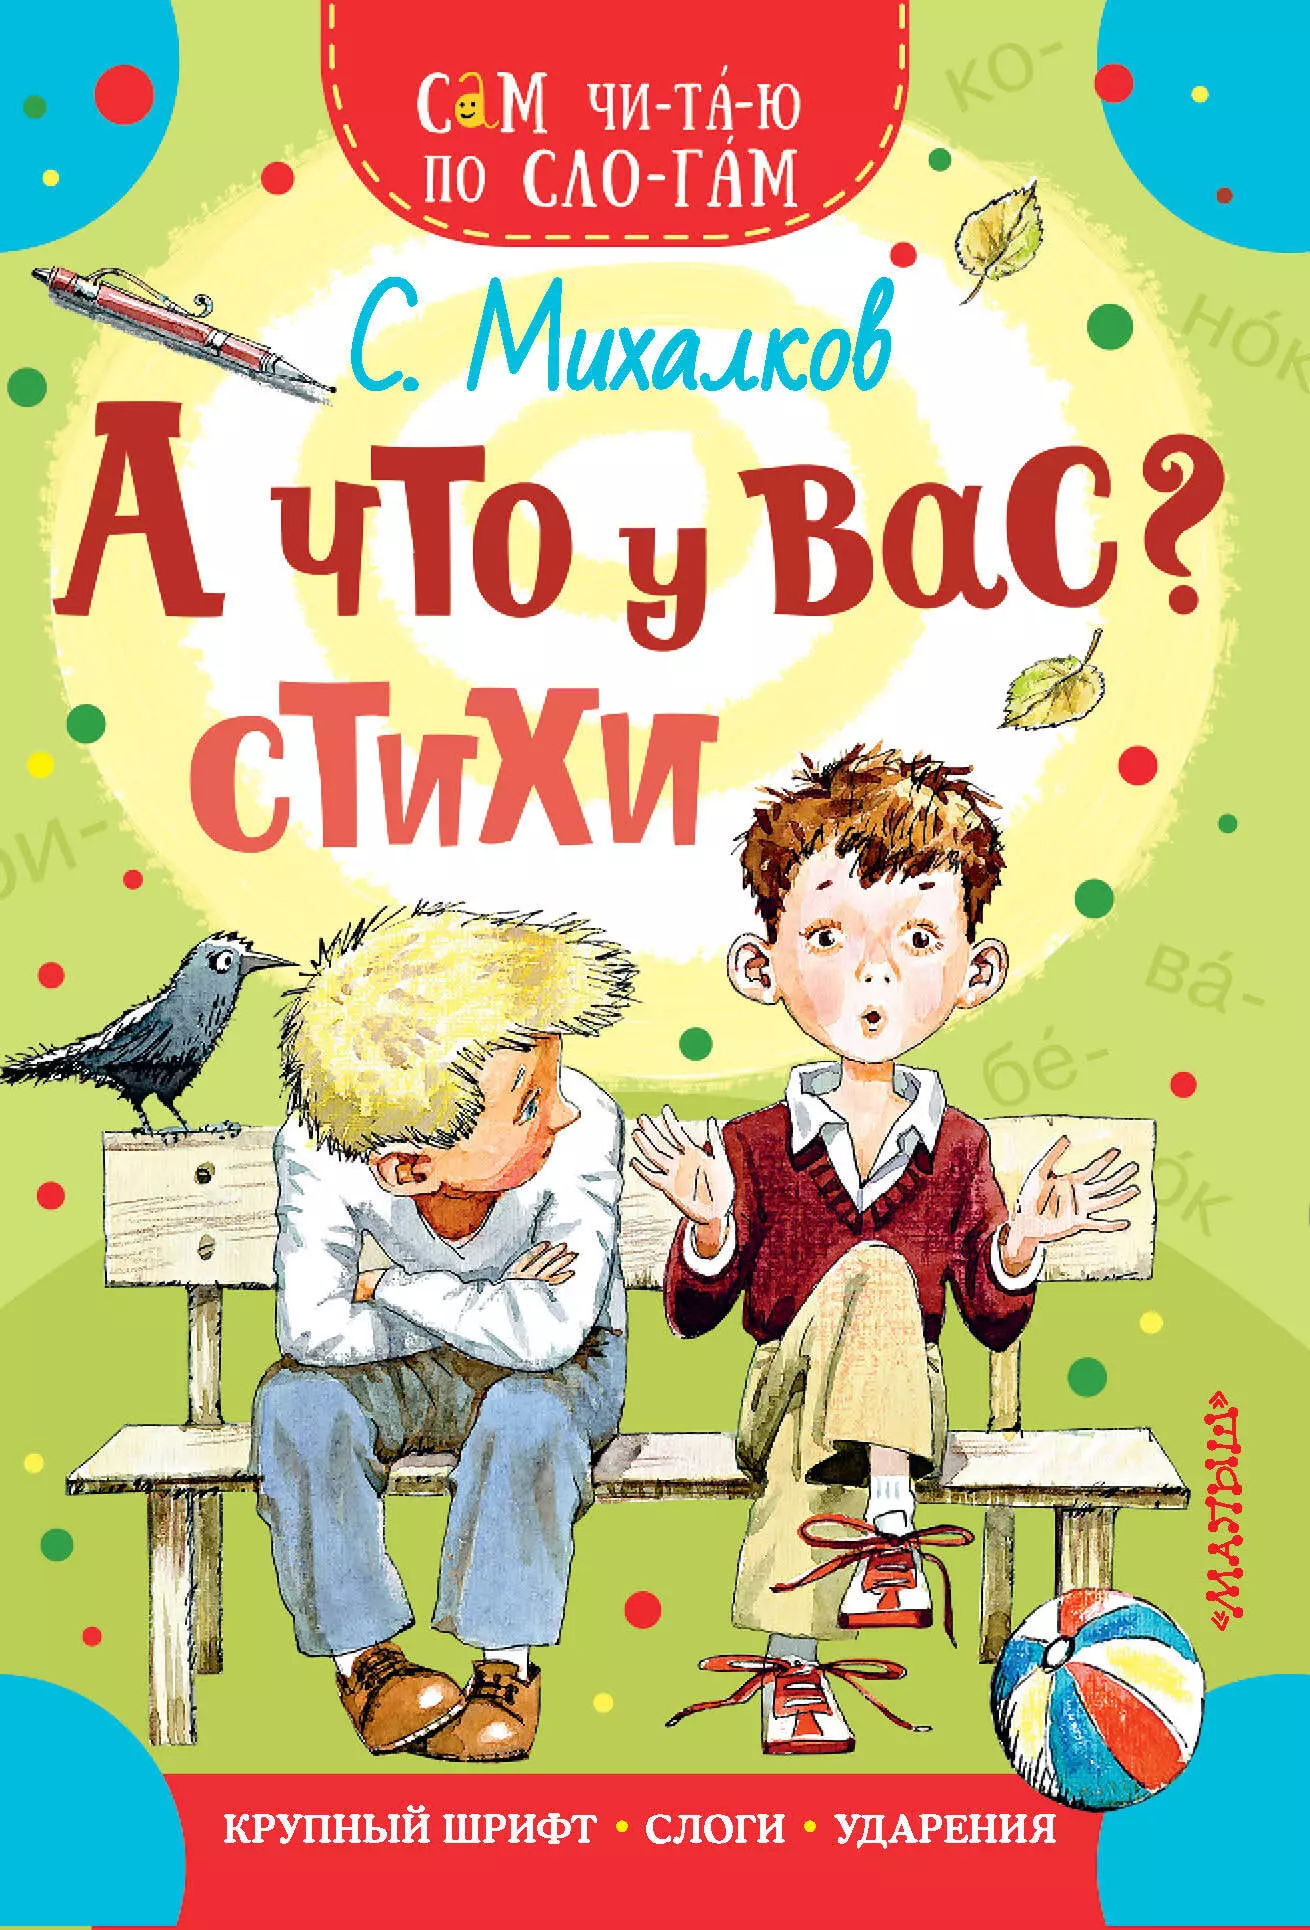 Книги про михалкова. А что у вас? Михалков с.в.. Михалков книги для детей. Михалков обложки книг.